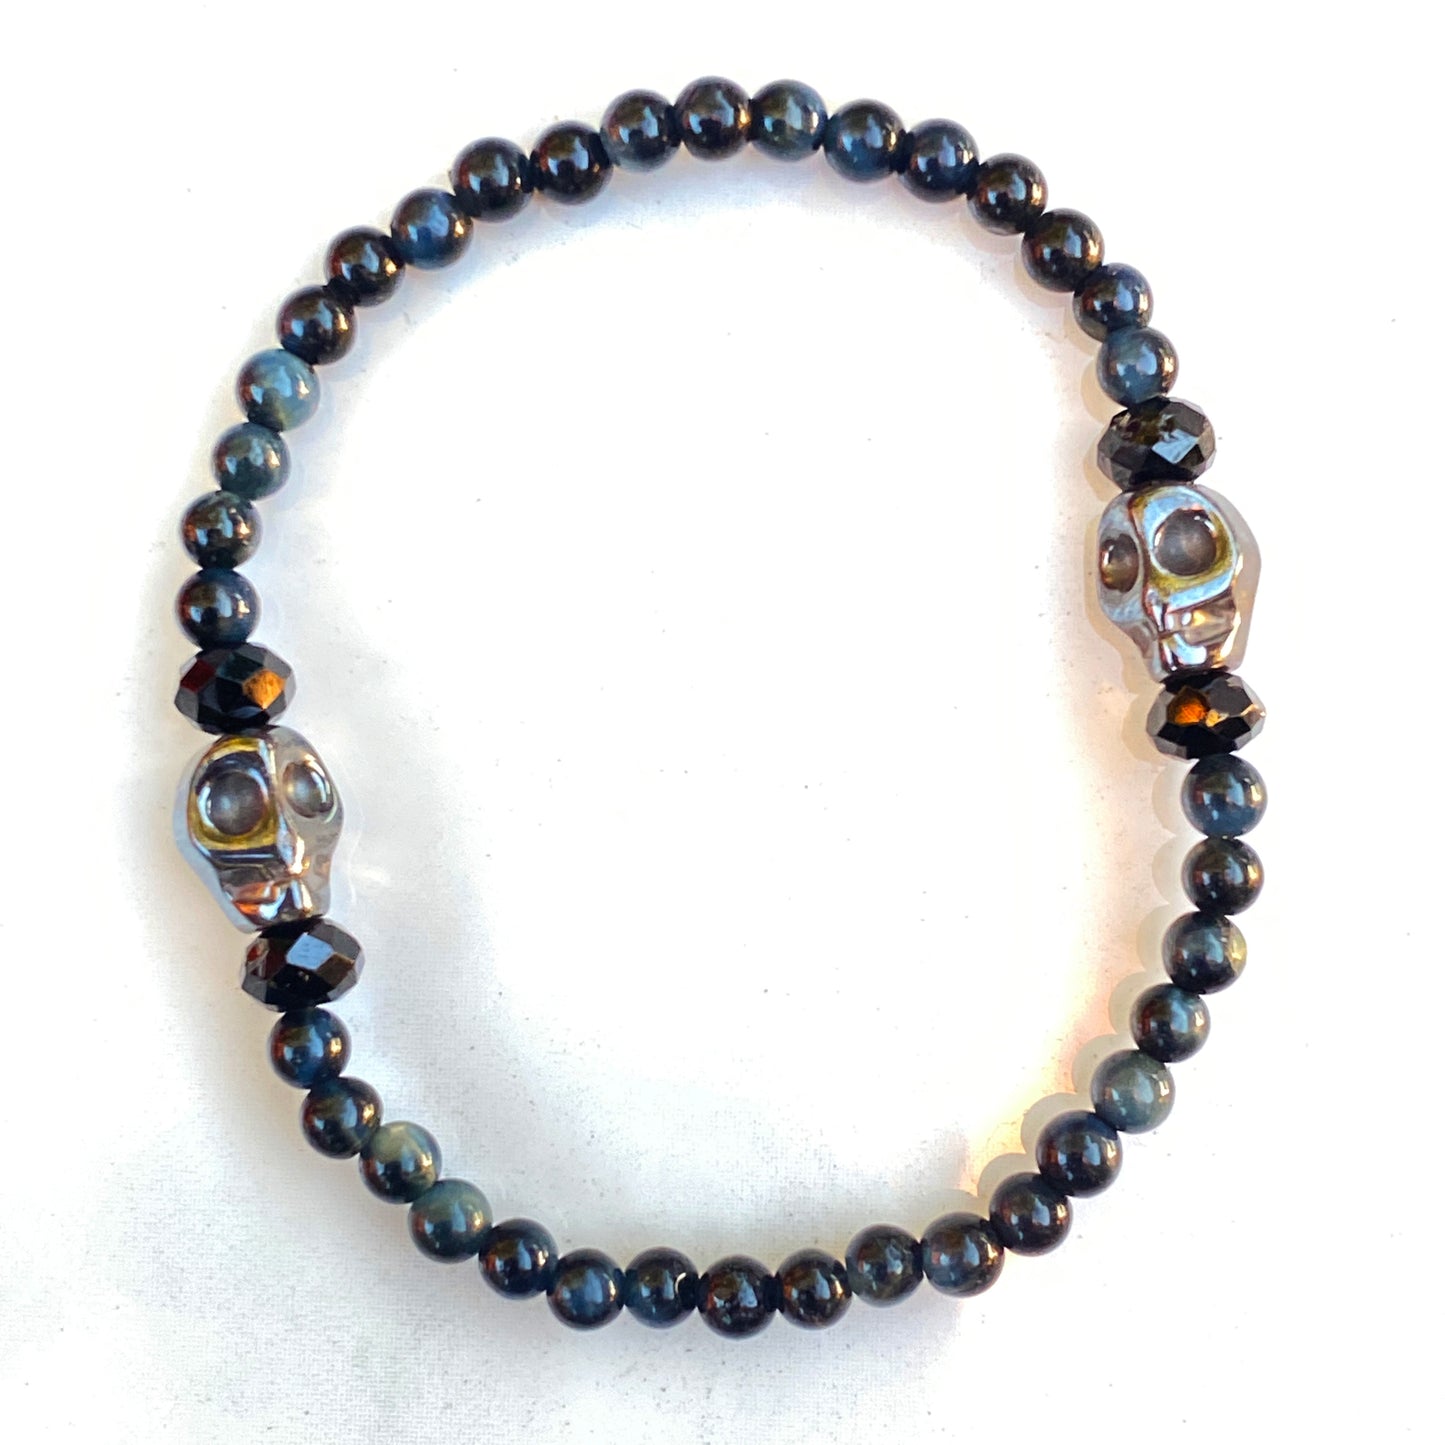 Blue Tiger Eye gemstones, Black Spinel, and Hematite Skull Women’s Stretch Bracelet